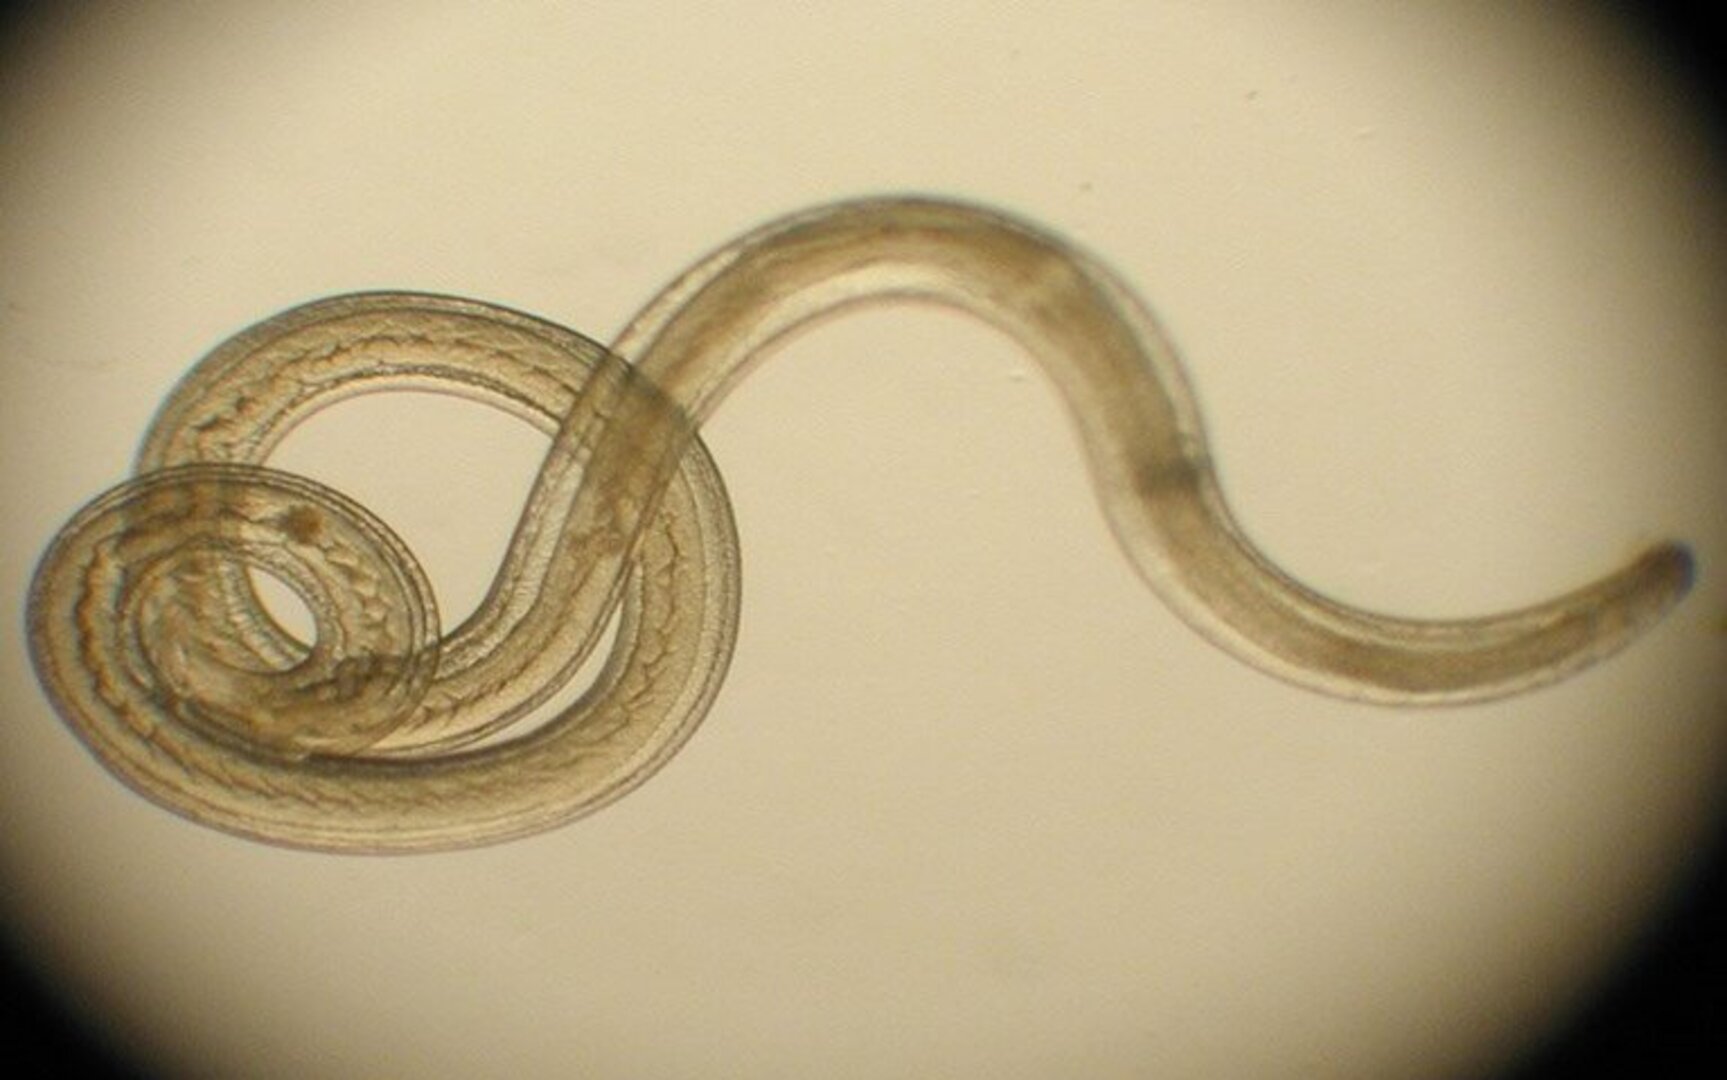 parasito nematodo